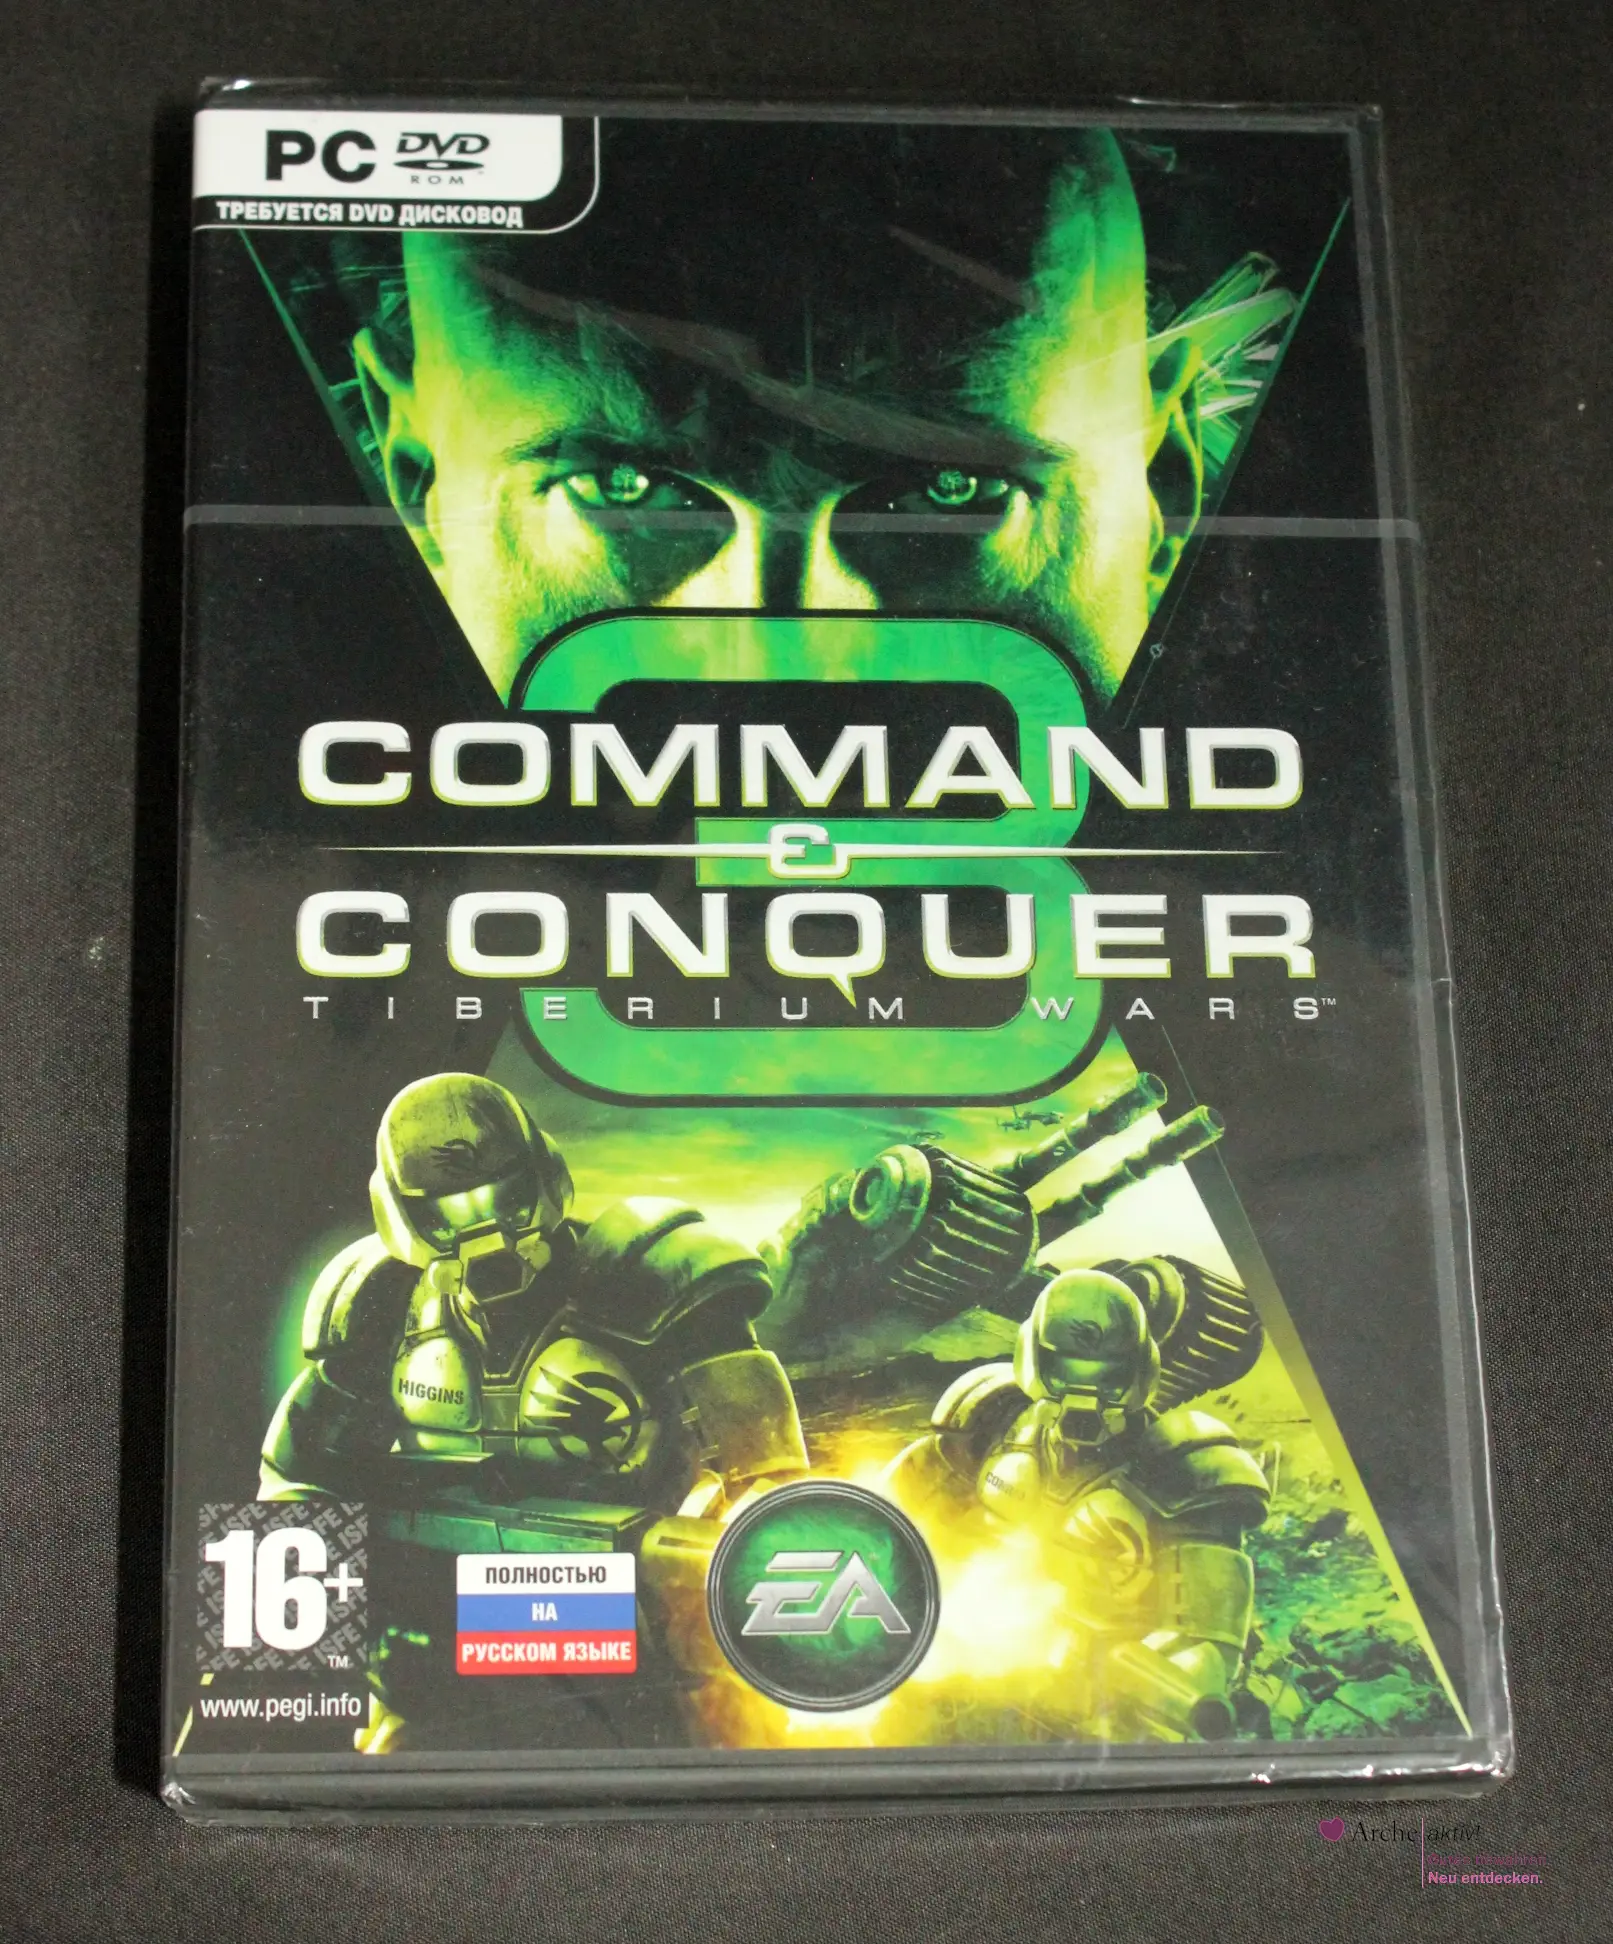 Command & Conquer 3 Tiberium Wars - PC DVD-ROM (russische Version), Neu in OVP